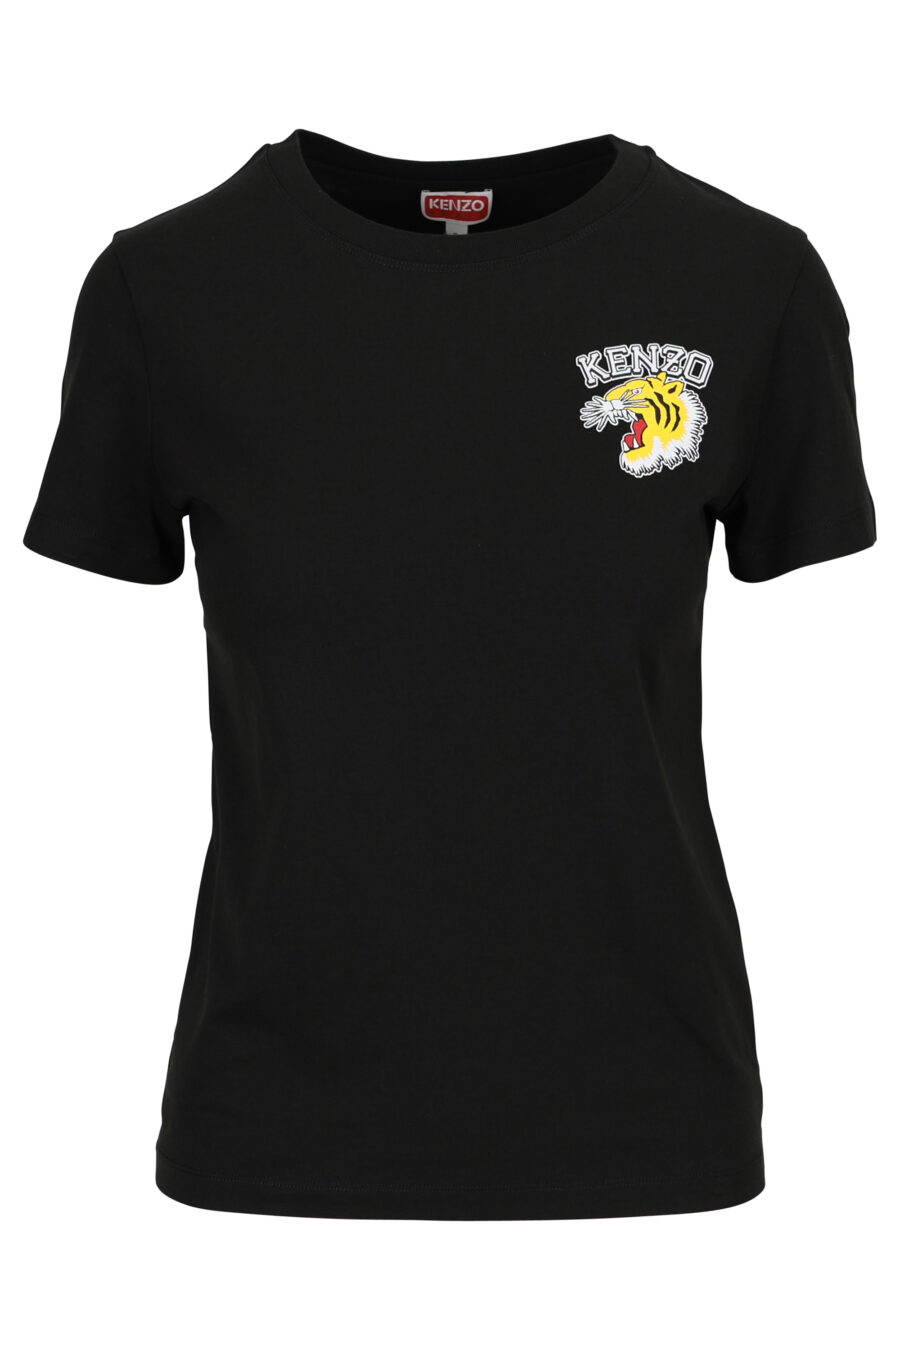 T-shirt preta com minilogo "tigre" - 3612230552319